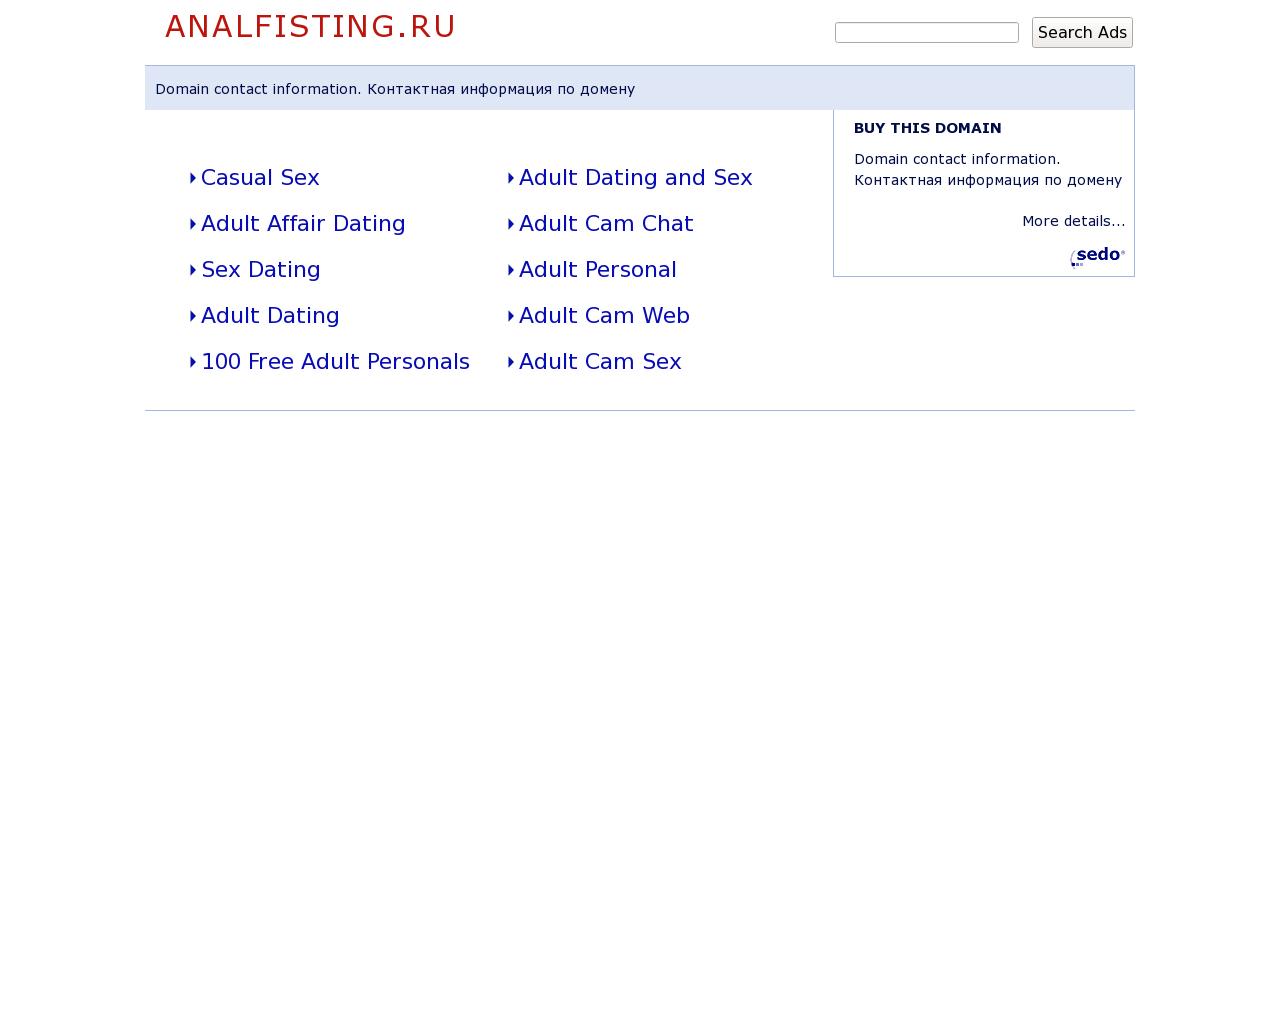 Изображение сайта analfisting.ru в разрешении 1280x1024